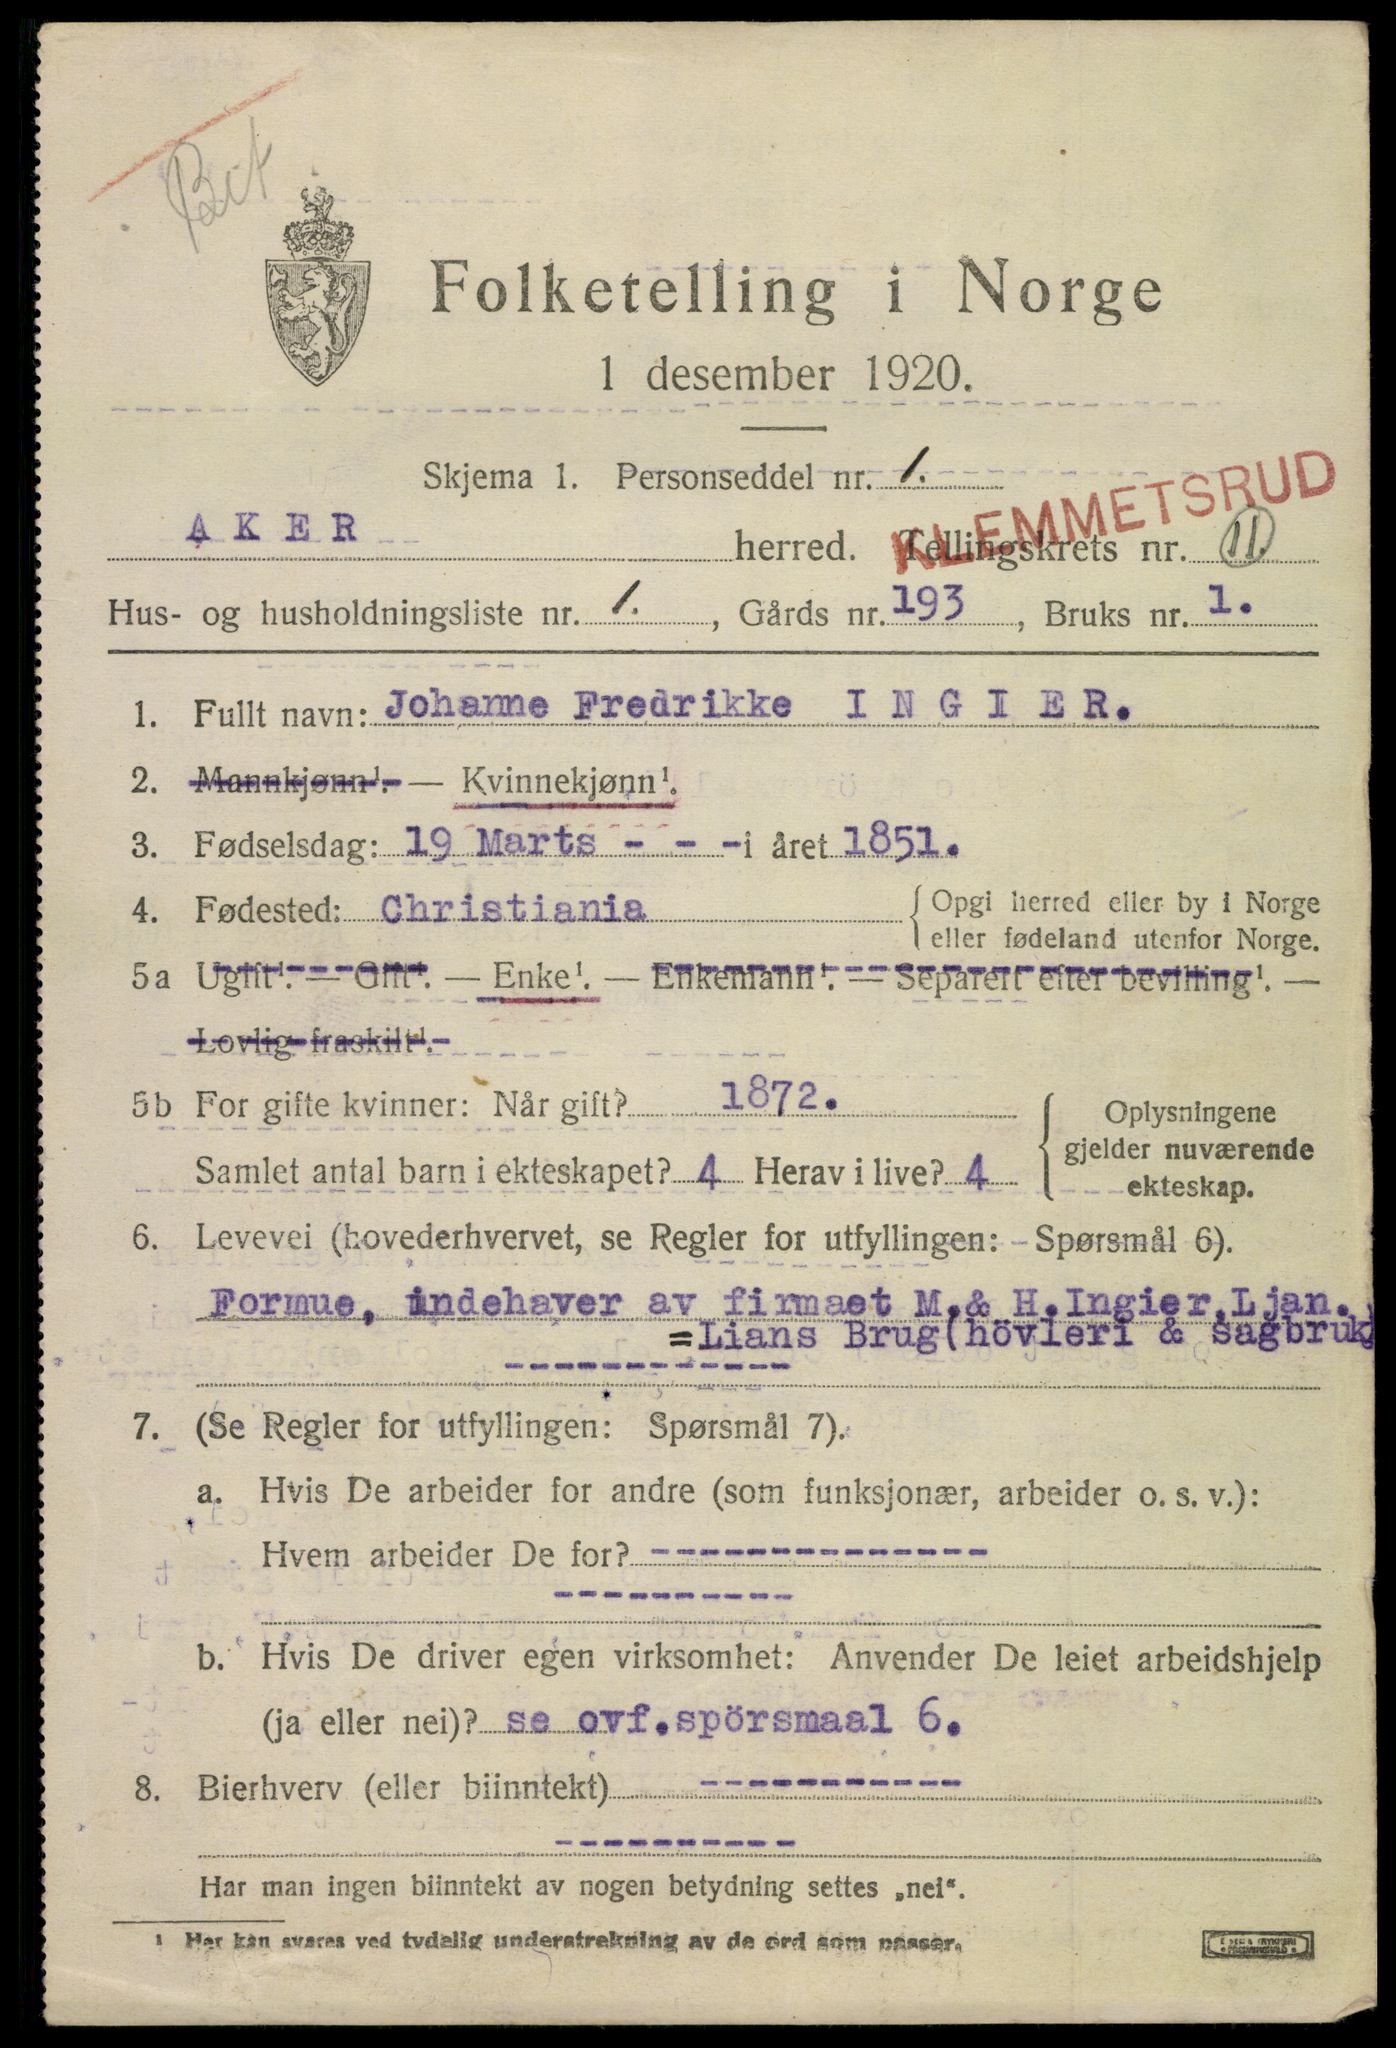 SAO, 1920 census for Aker, 1920, p. 70422